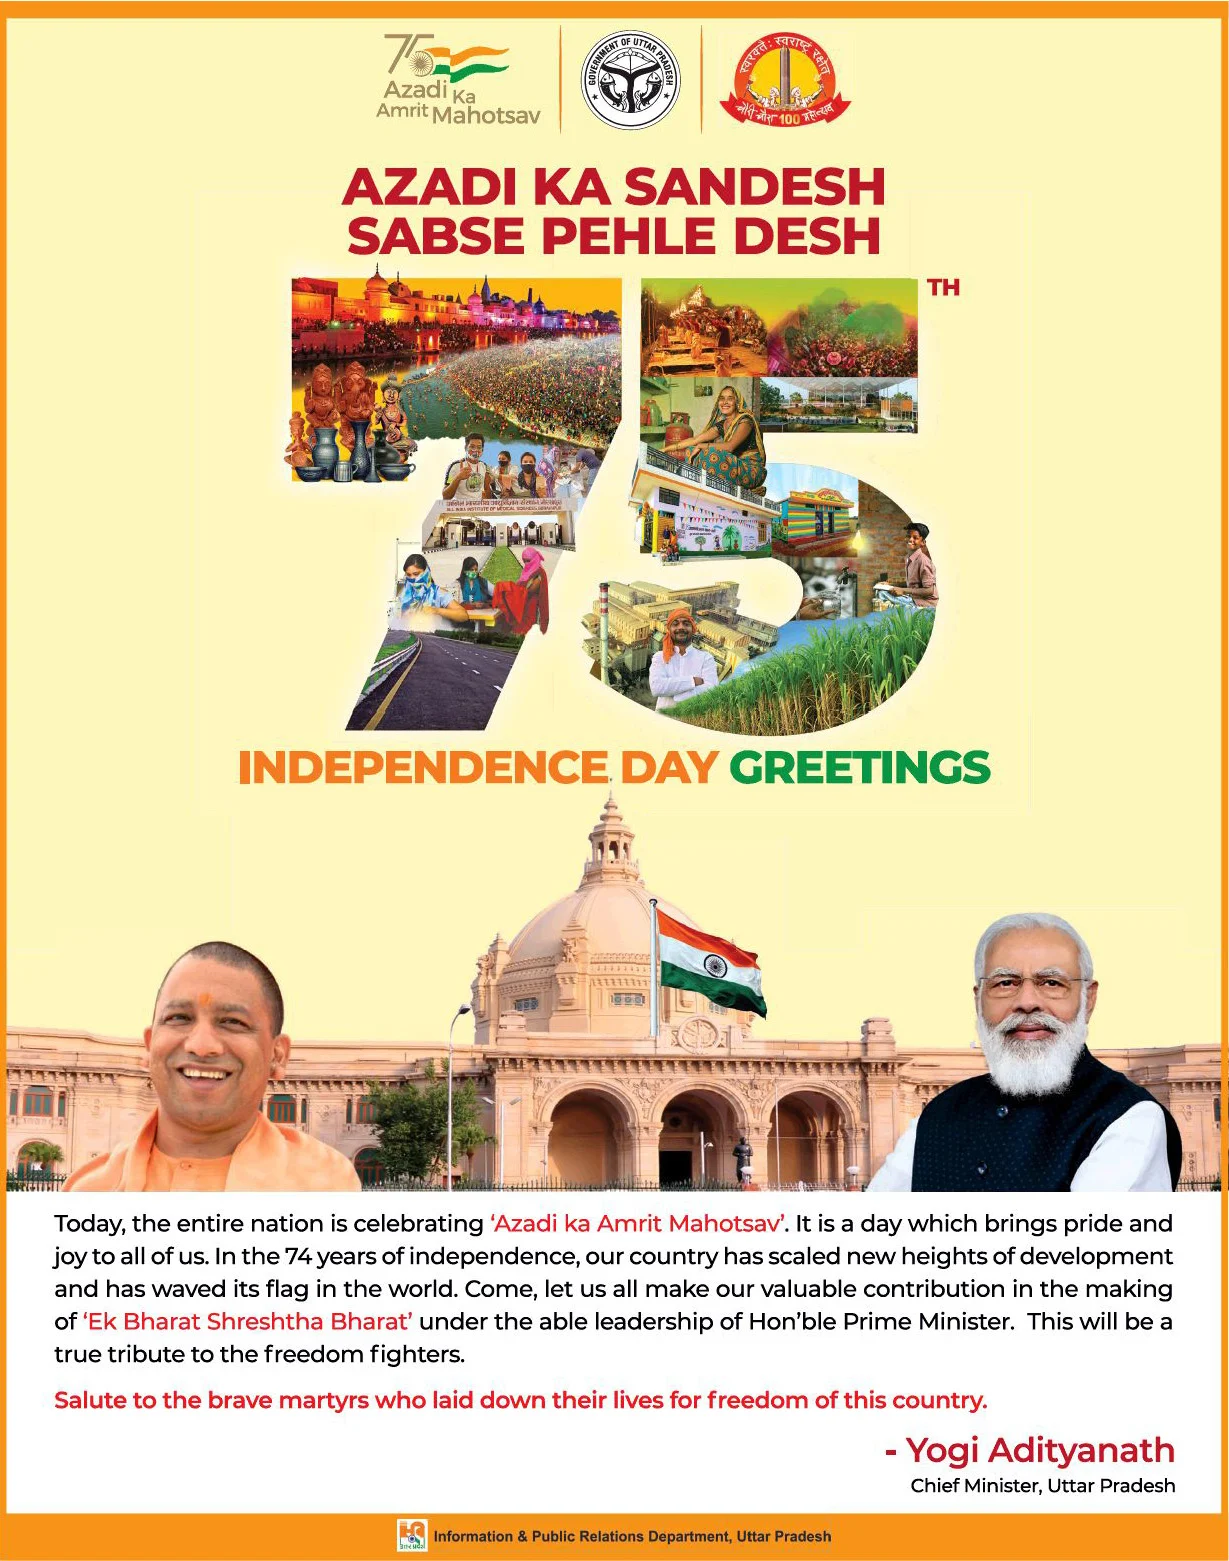 #7 UP Govt.: Azadi ka Sandesh Sabse Pehle Desh 75 Independence Day Greetings